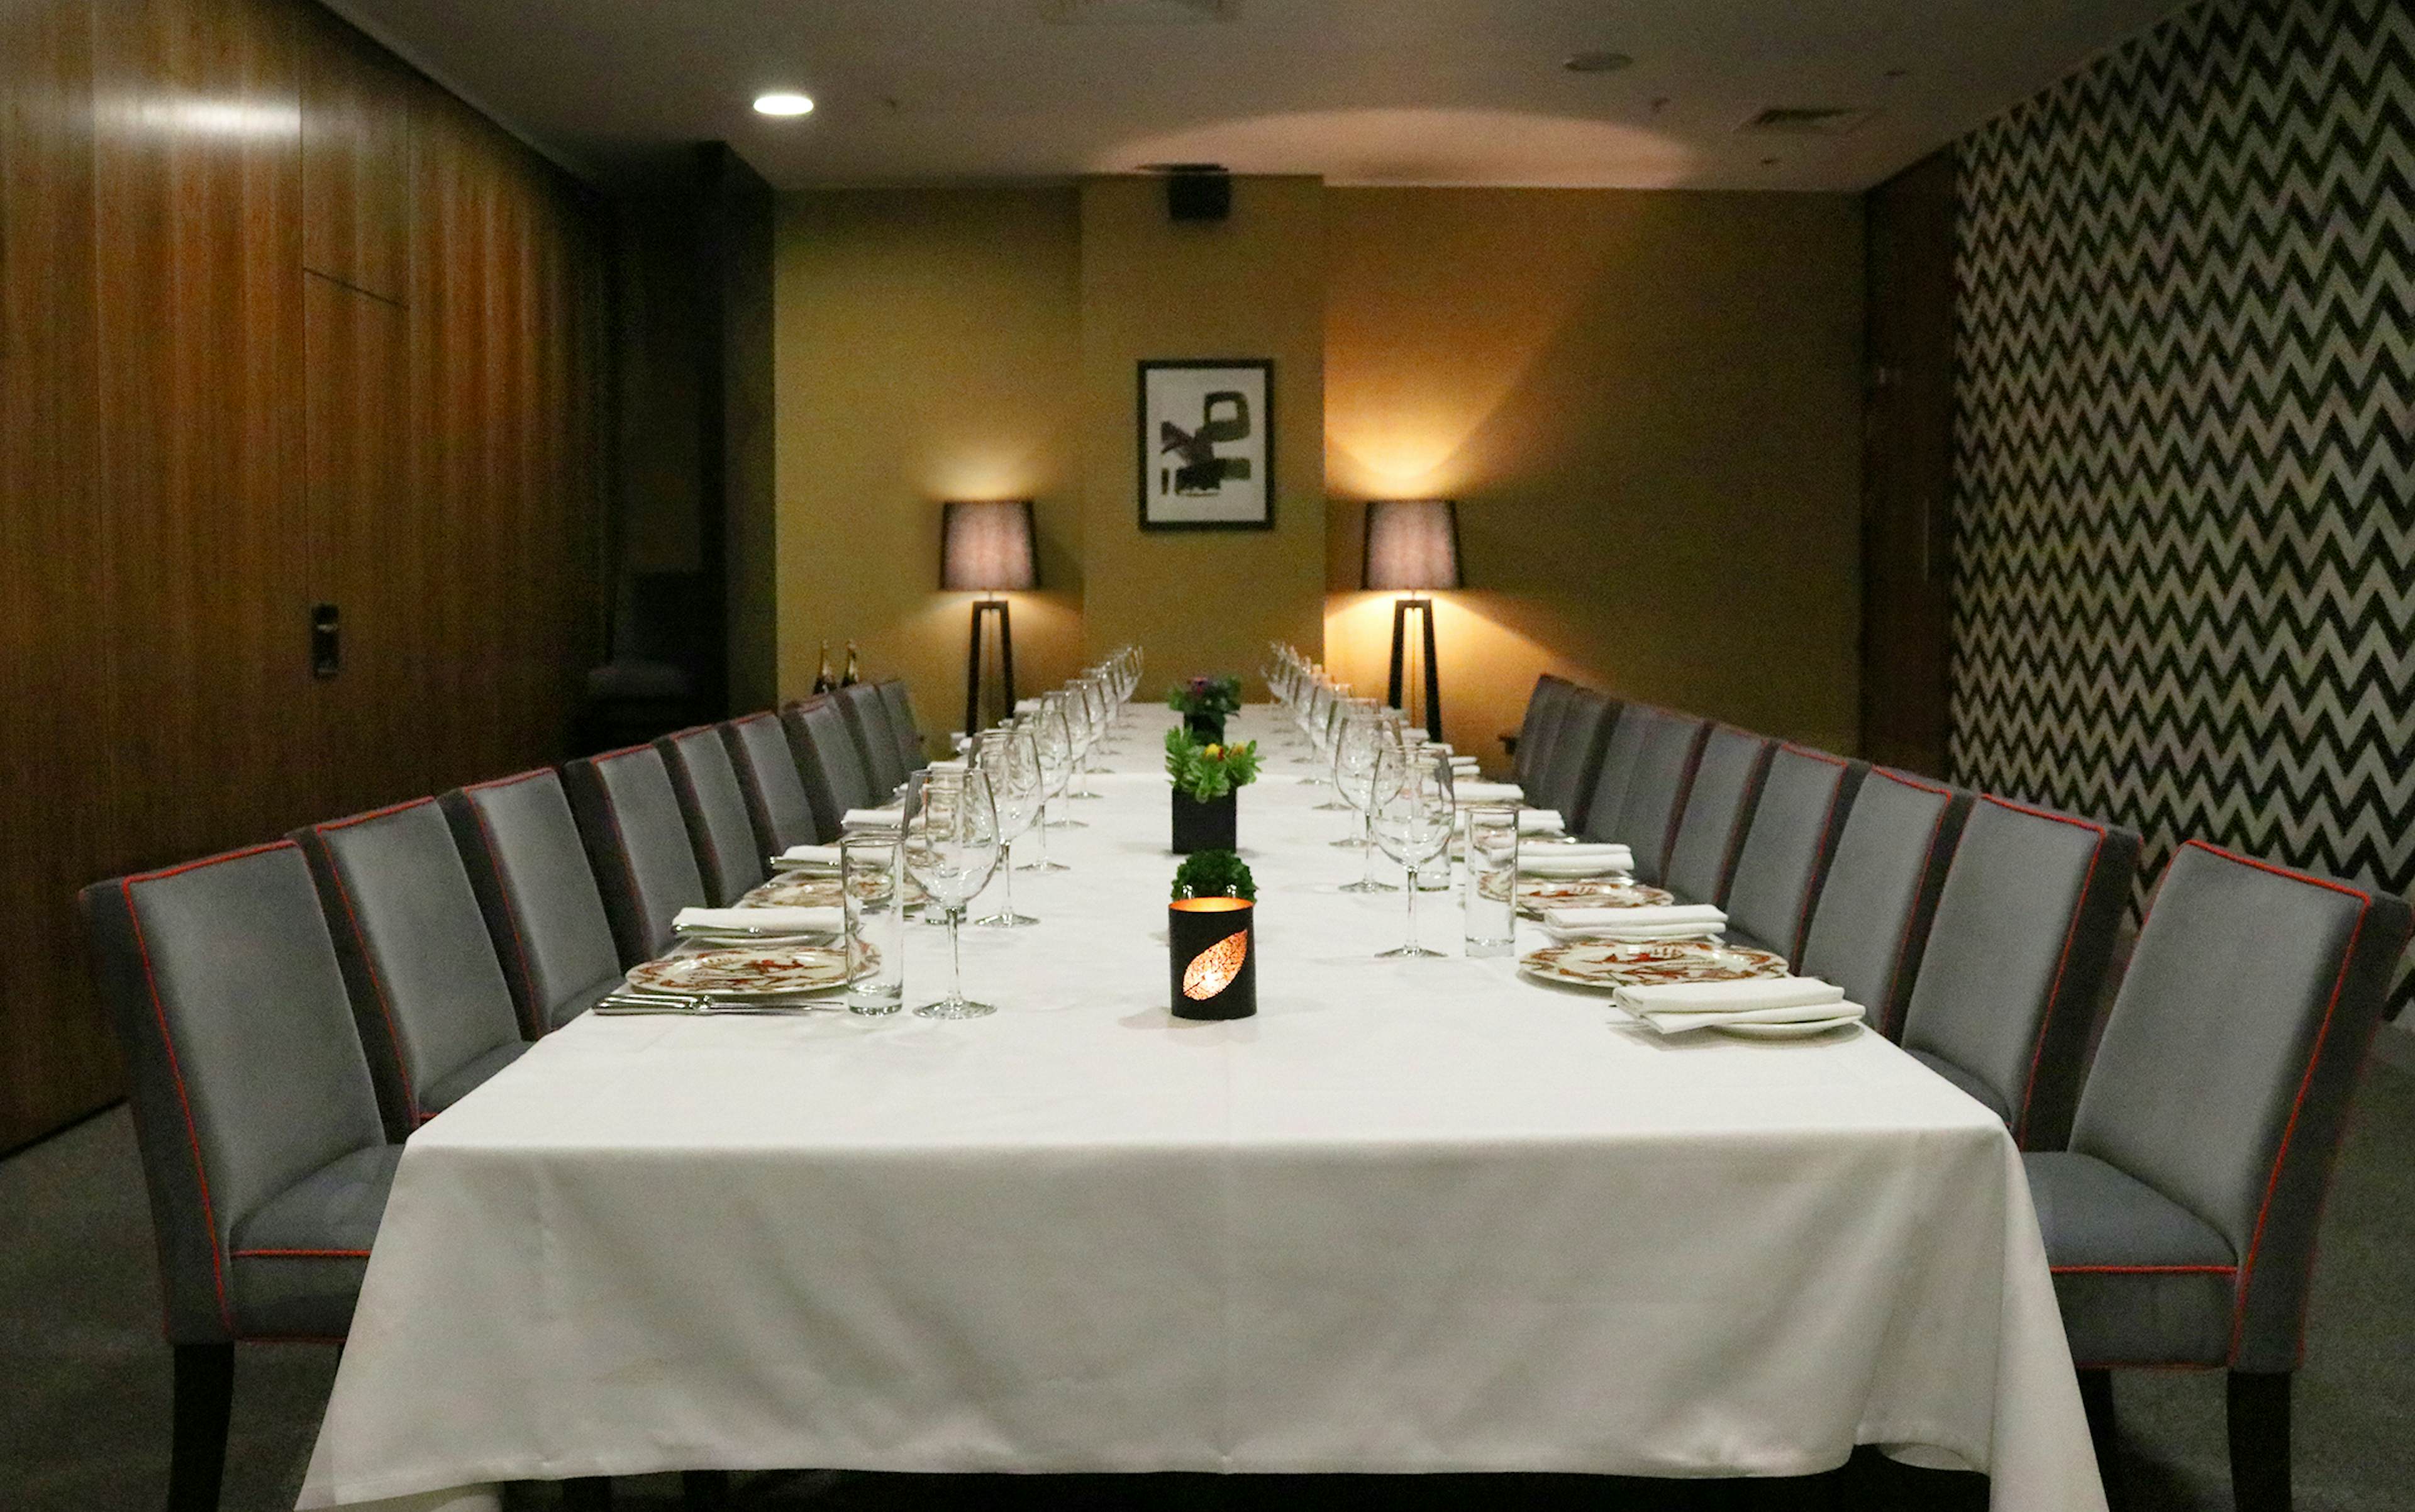 Opus Restaurant - Private room image 1